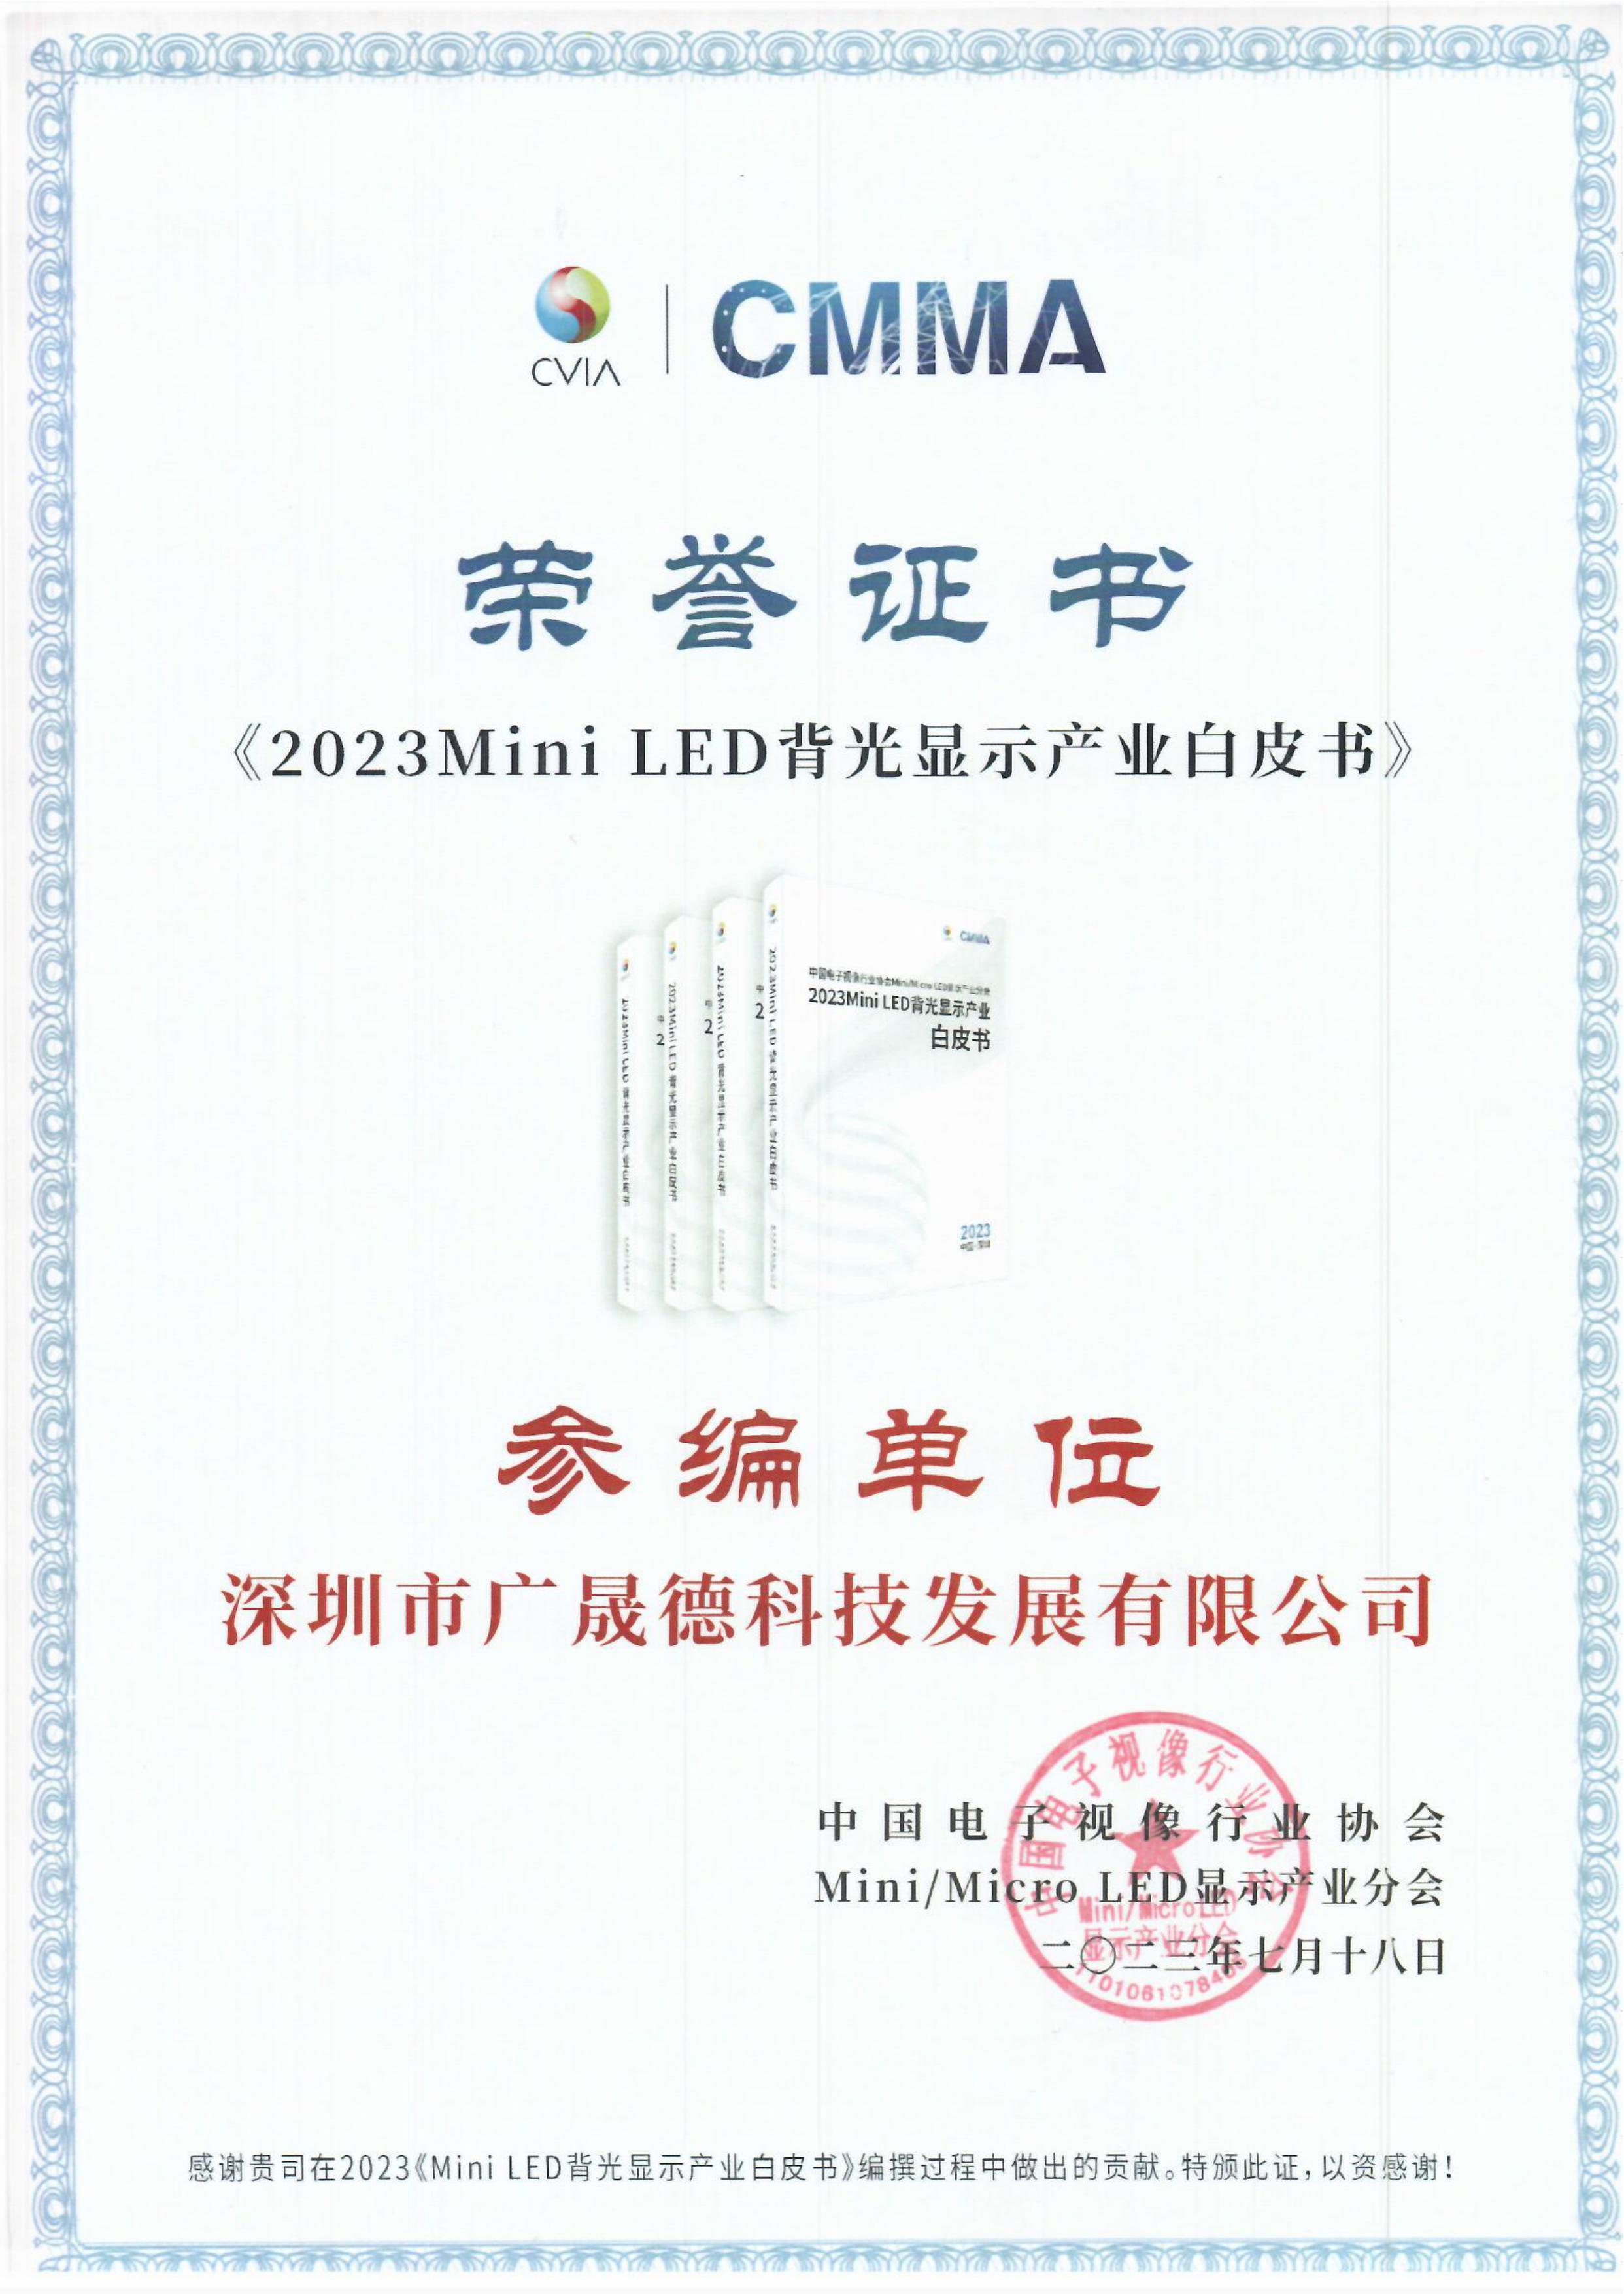 2023Mini LED背光显示产业¤白皮书参编单位证书